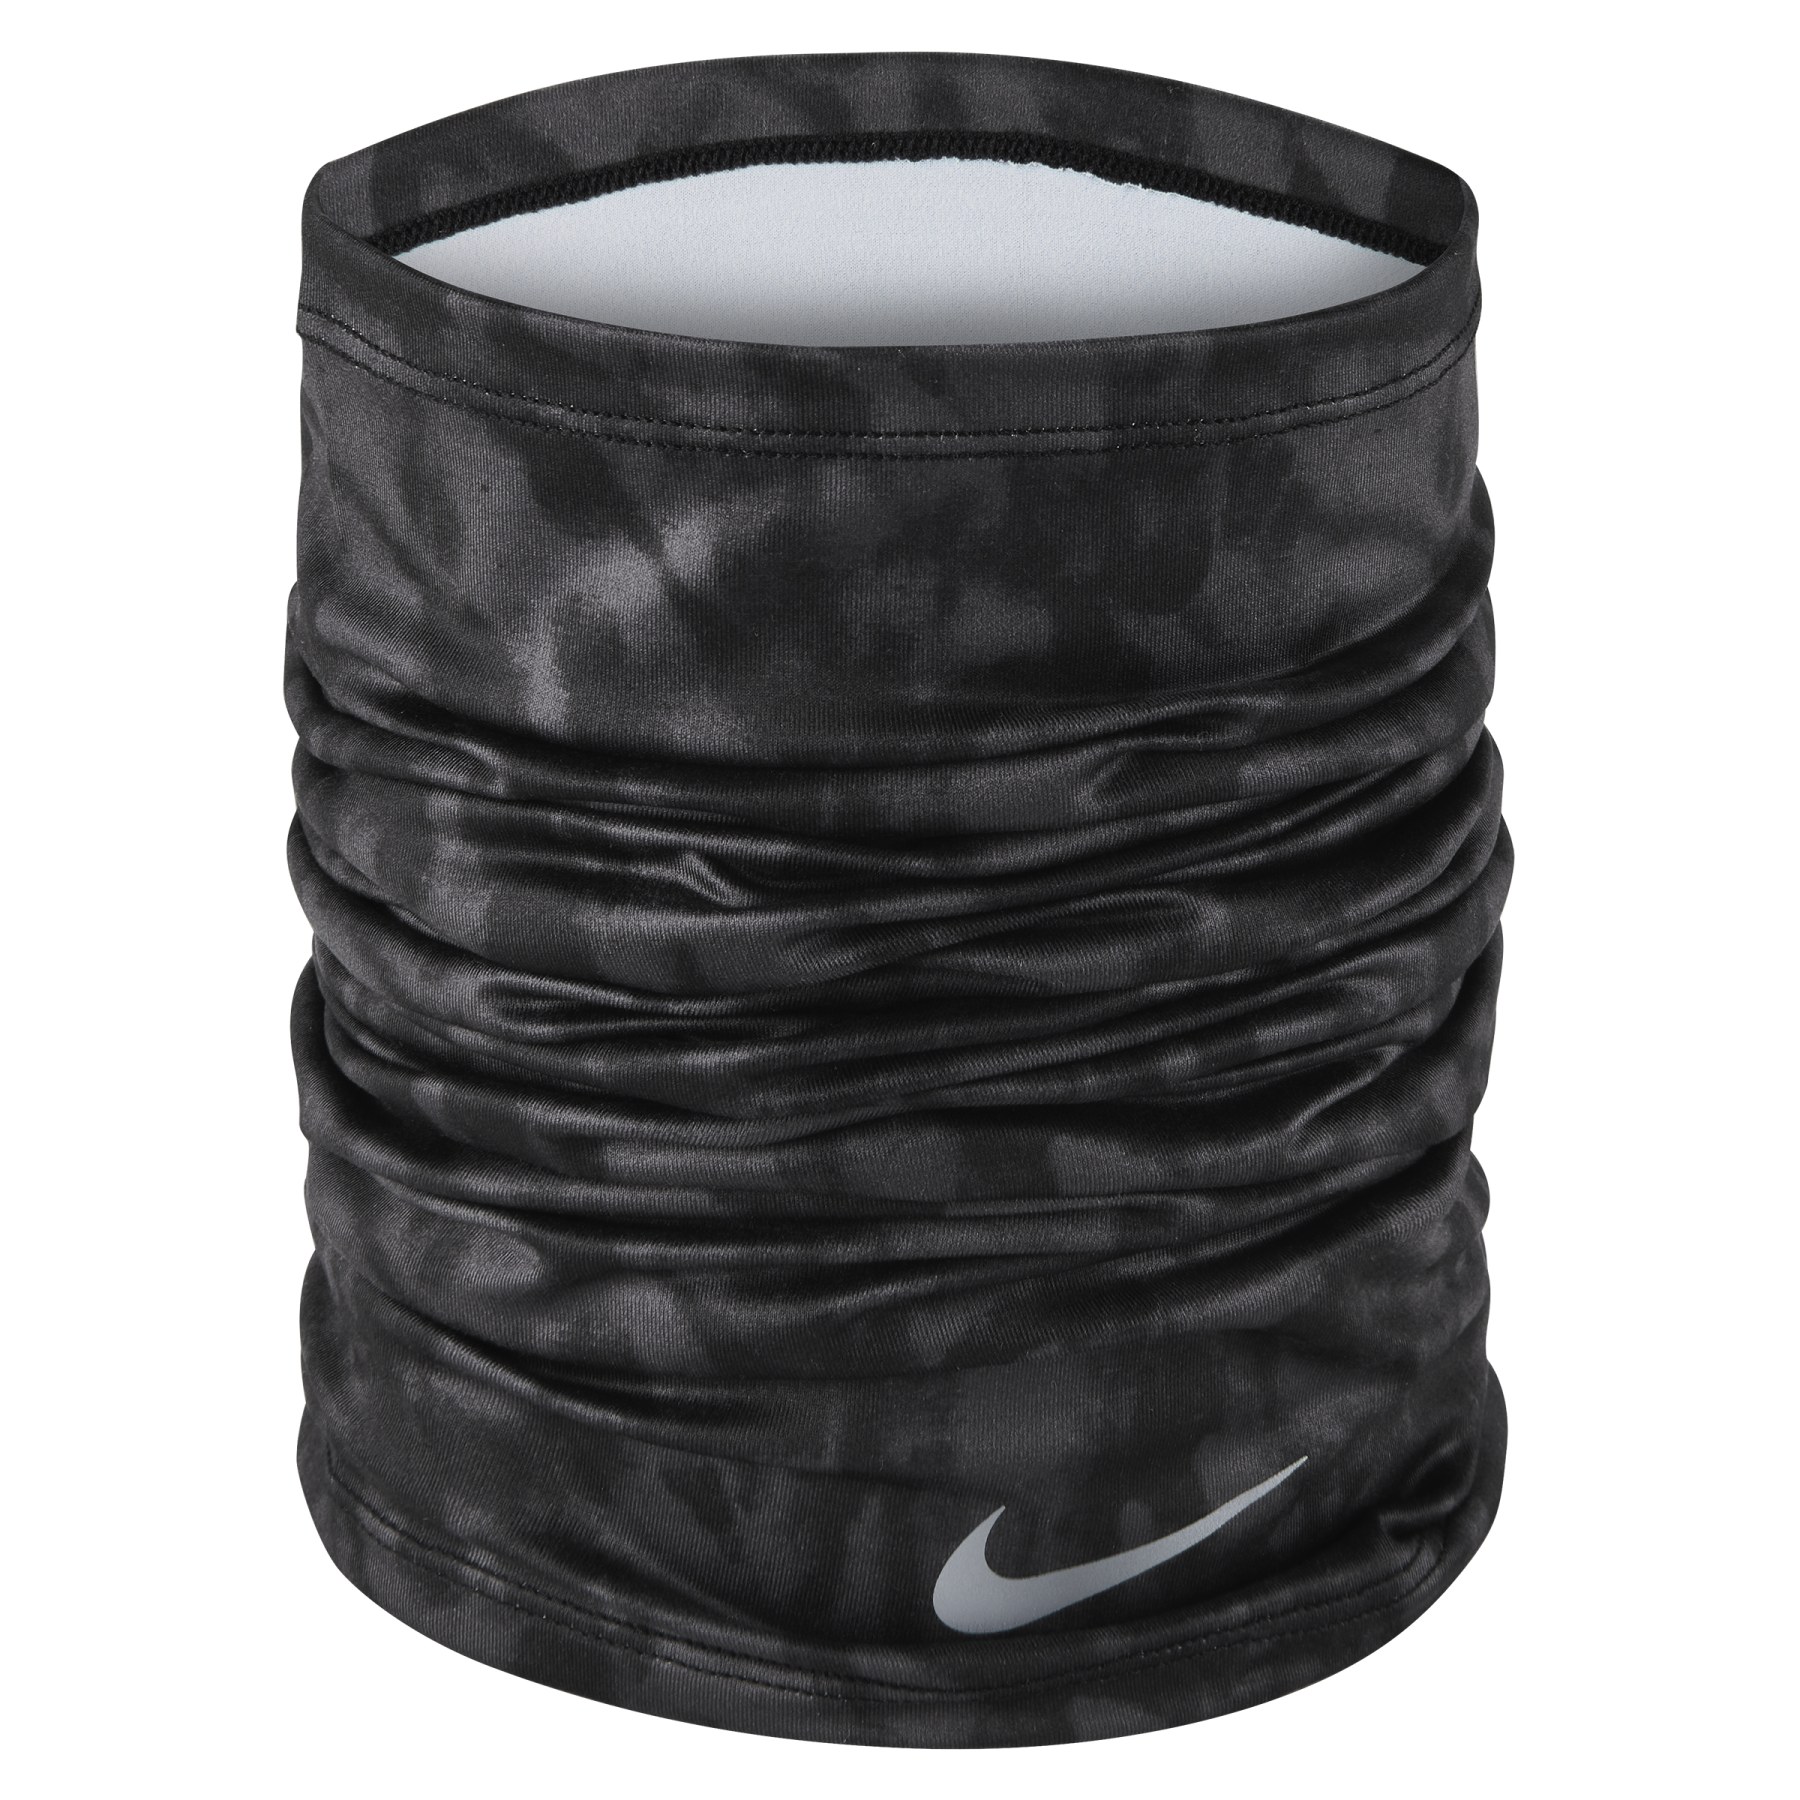 Productfoto van Nike DRI-Fit Wrap Multifunctional Cloth - black/silver 923